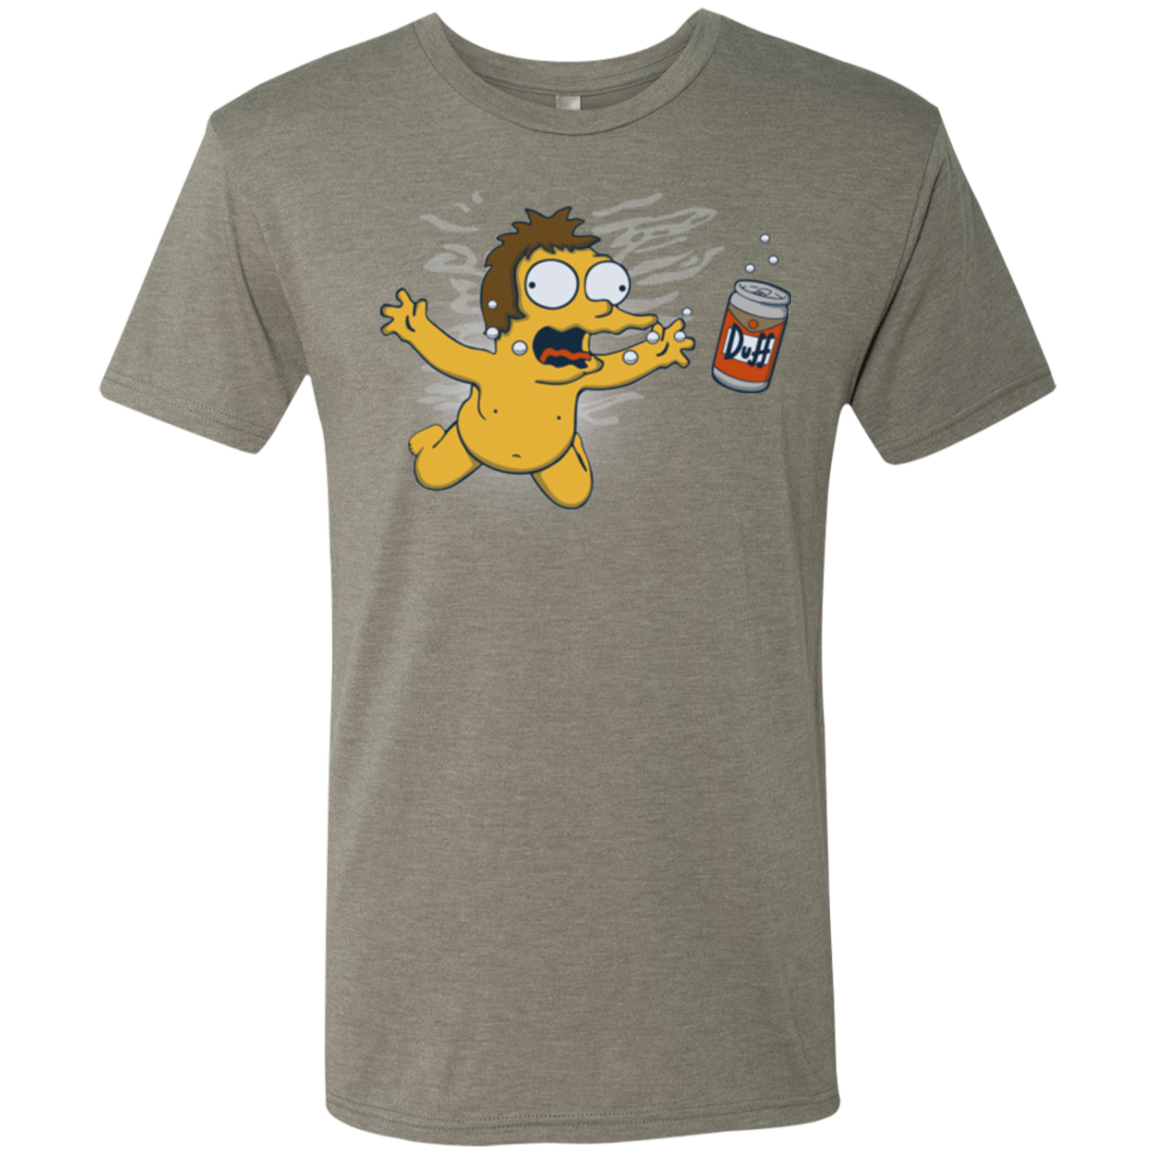 Duffmind Men's Triblend T-Shirt